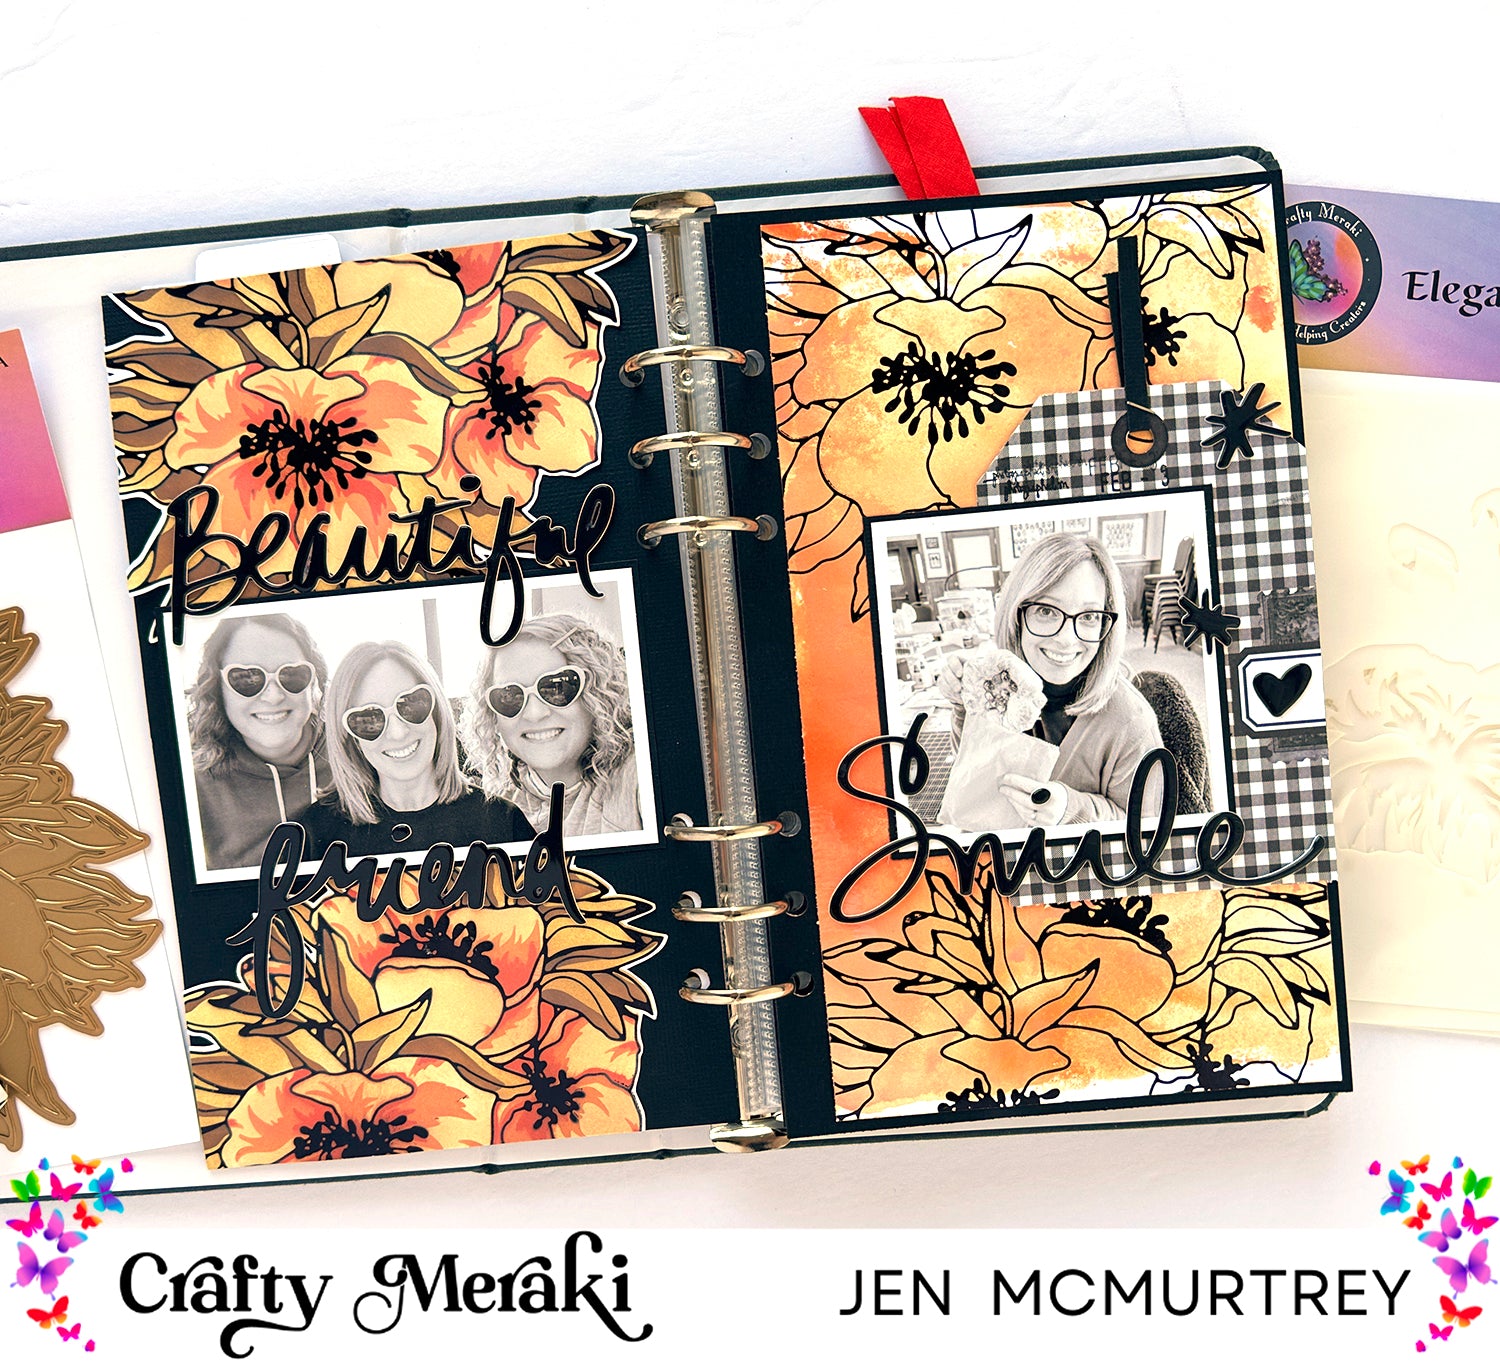 Crafty Meraki Elegance with Jen McMurtrey